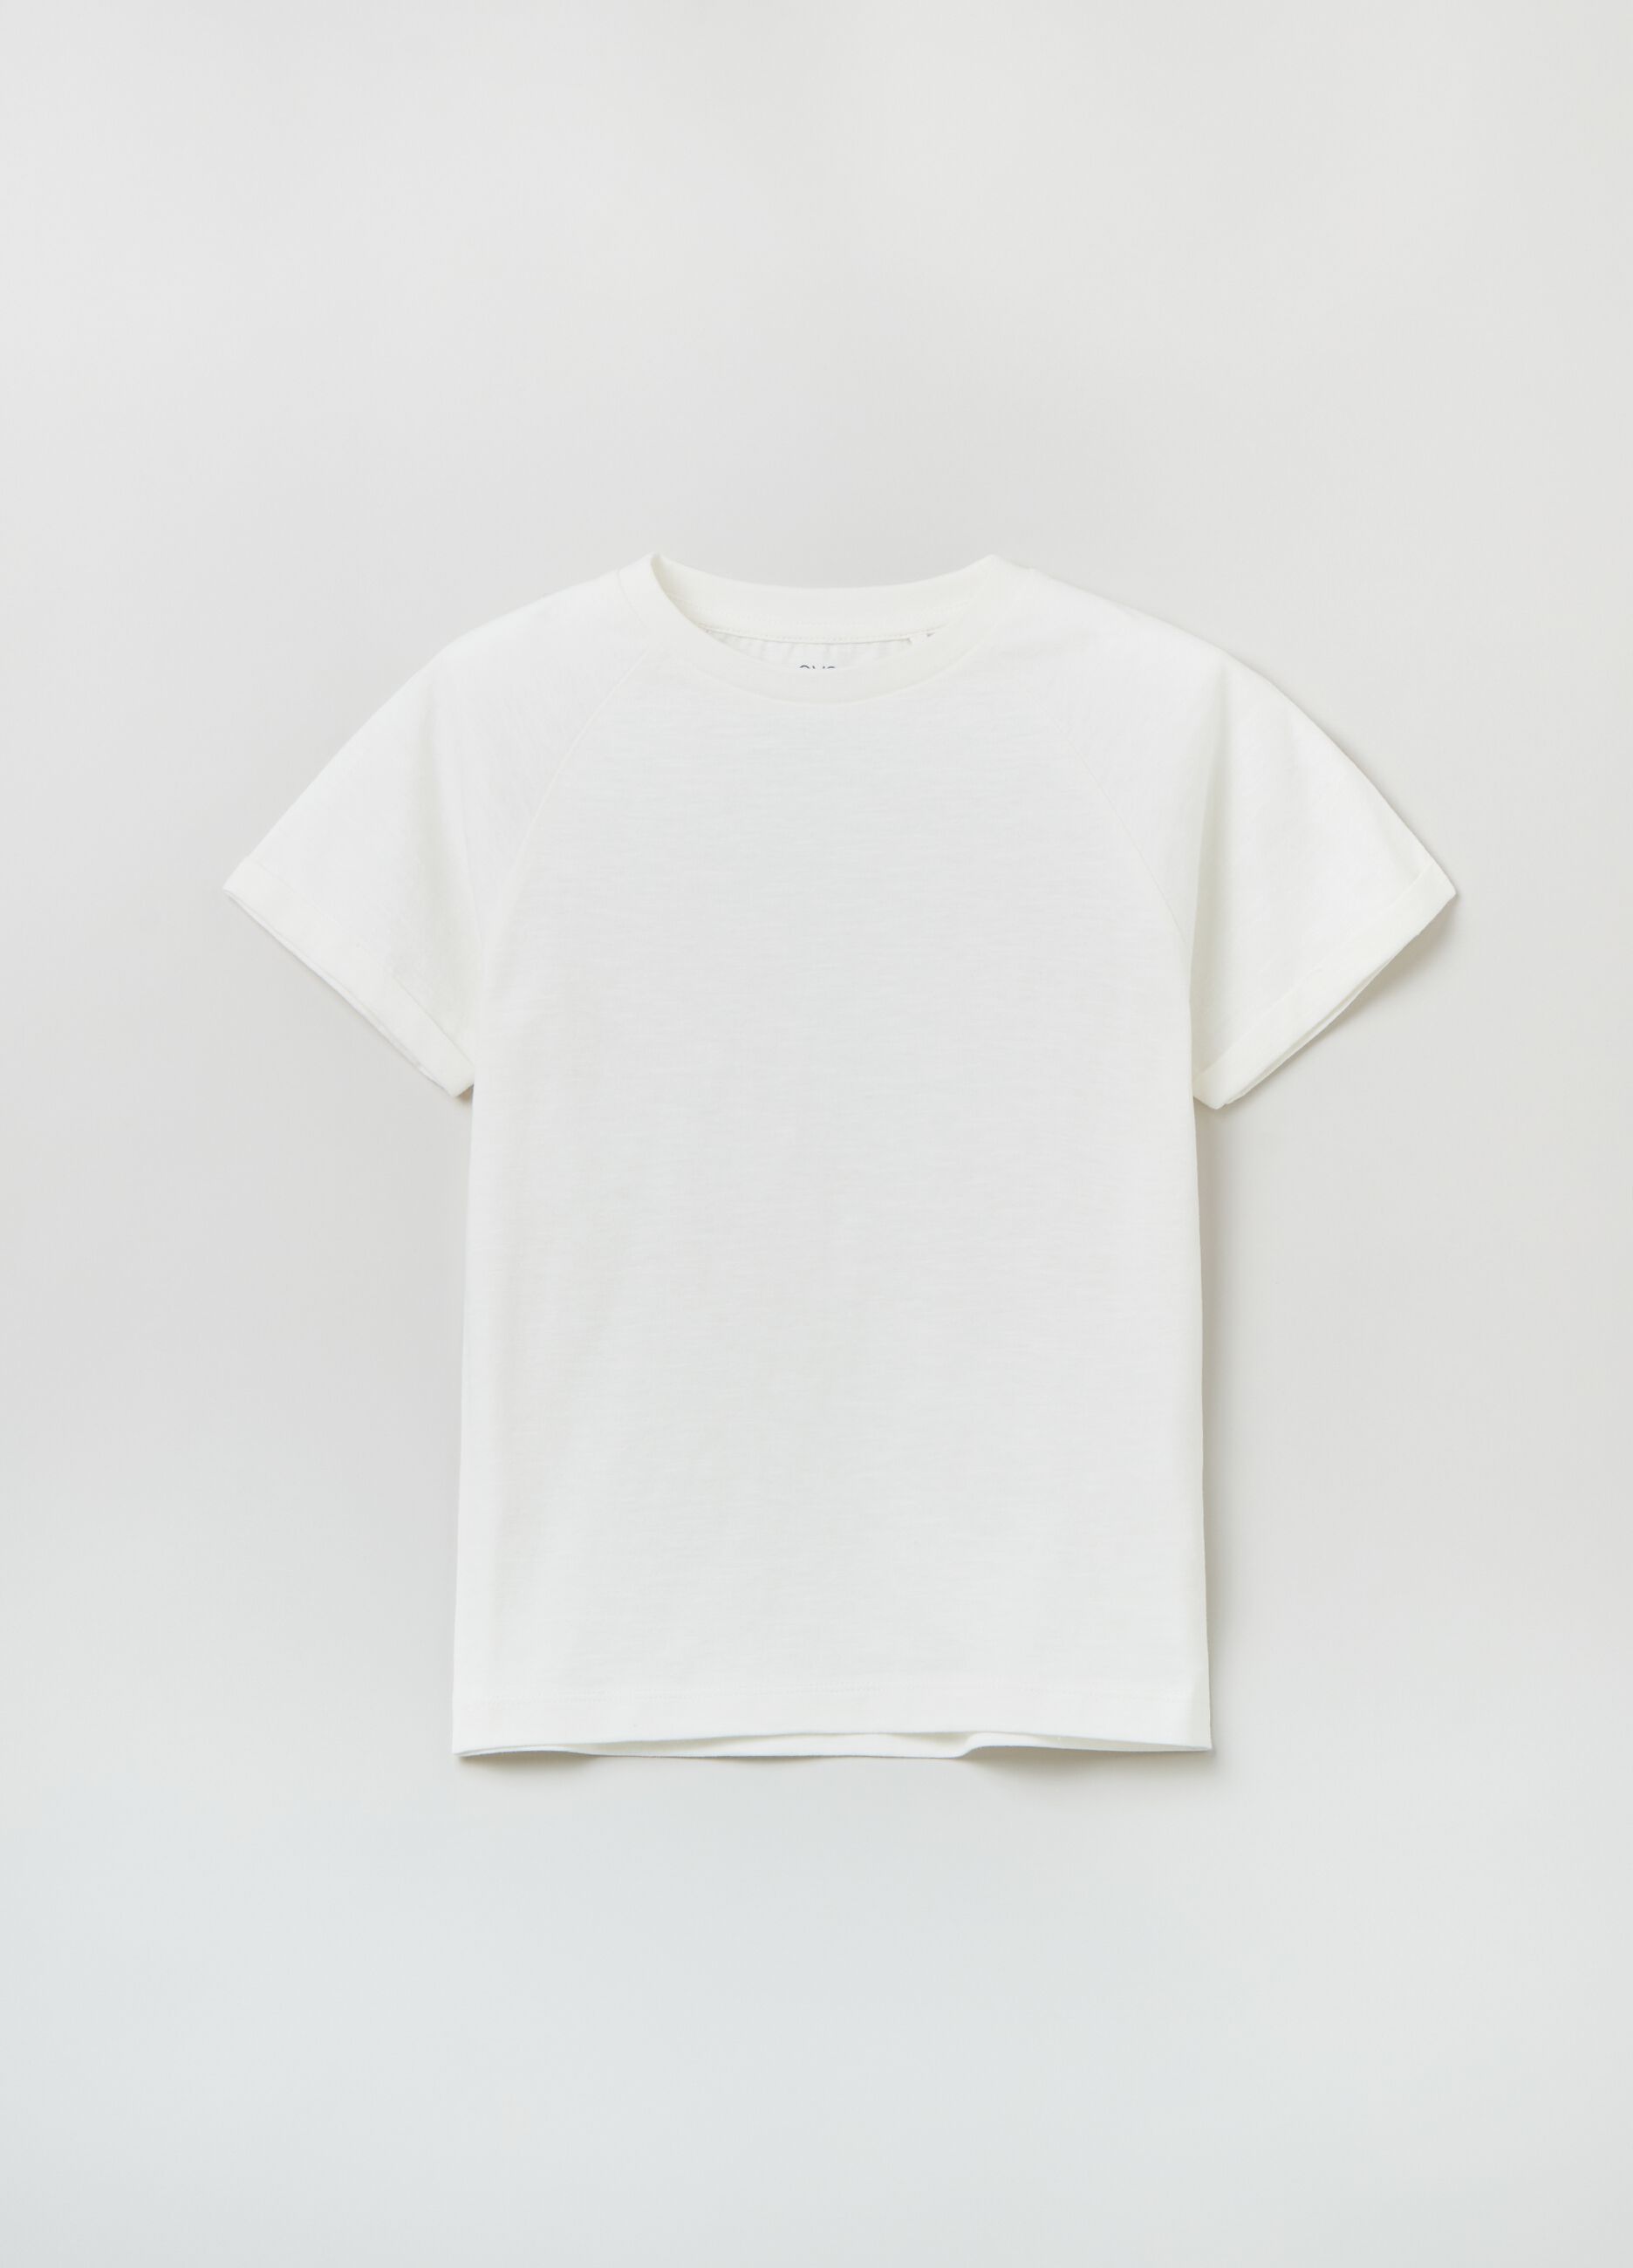 Slub cotton T-shirt with round neck